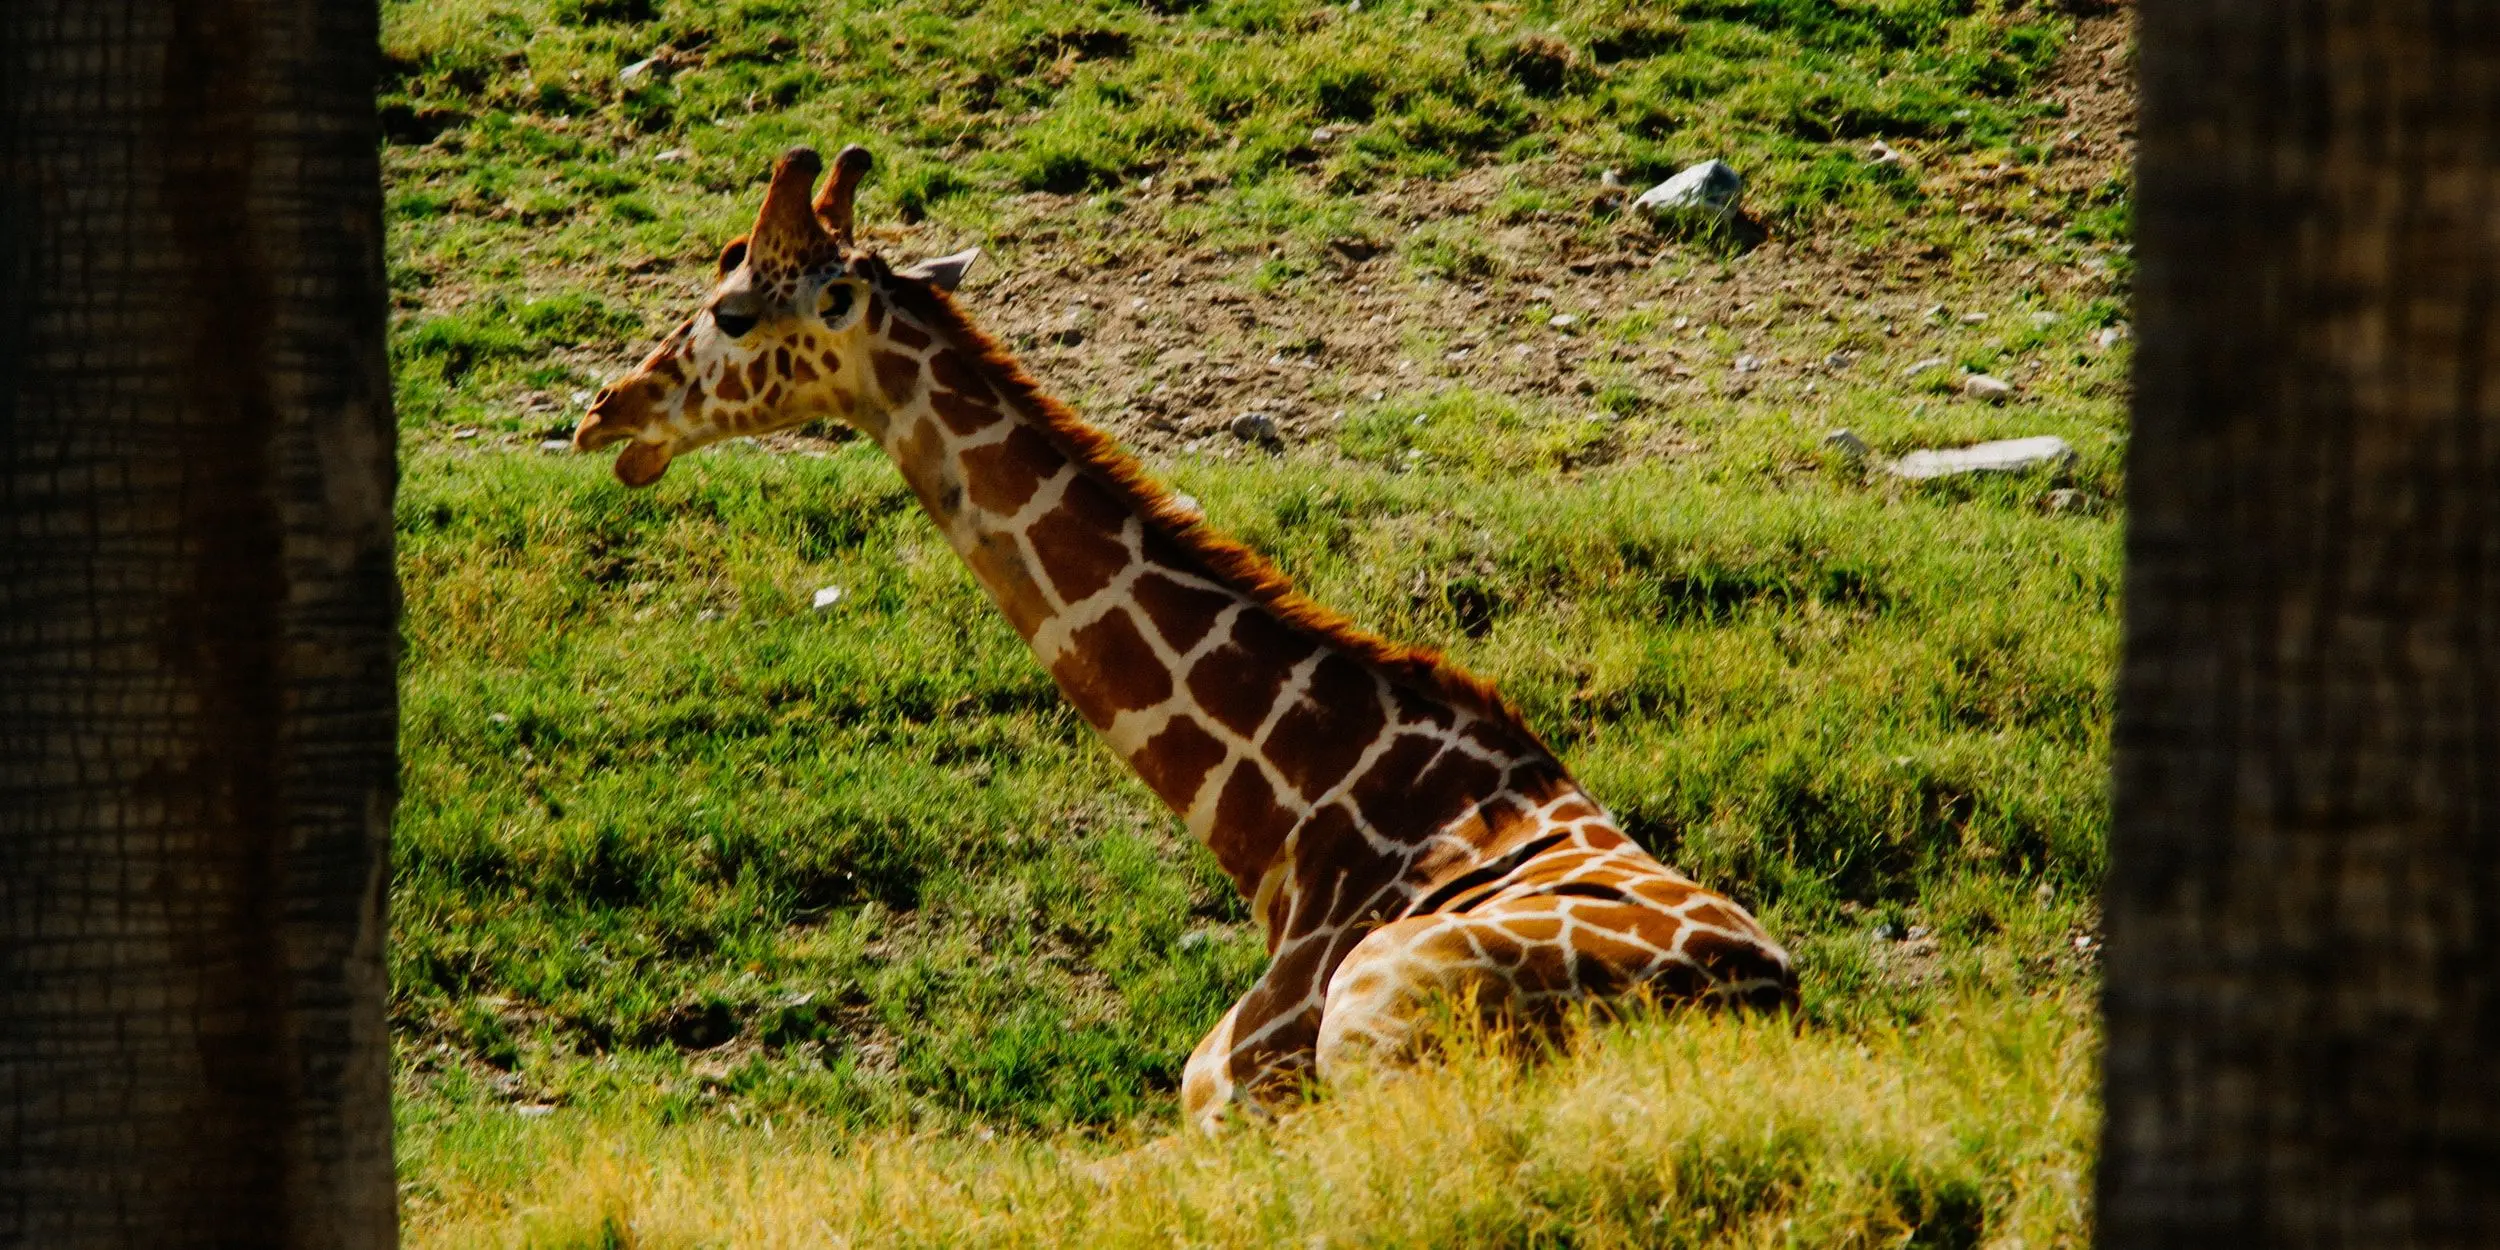 A giraffe sits down on green grass between two tree trunks.